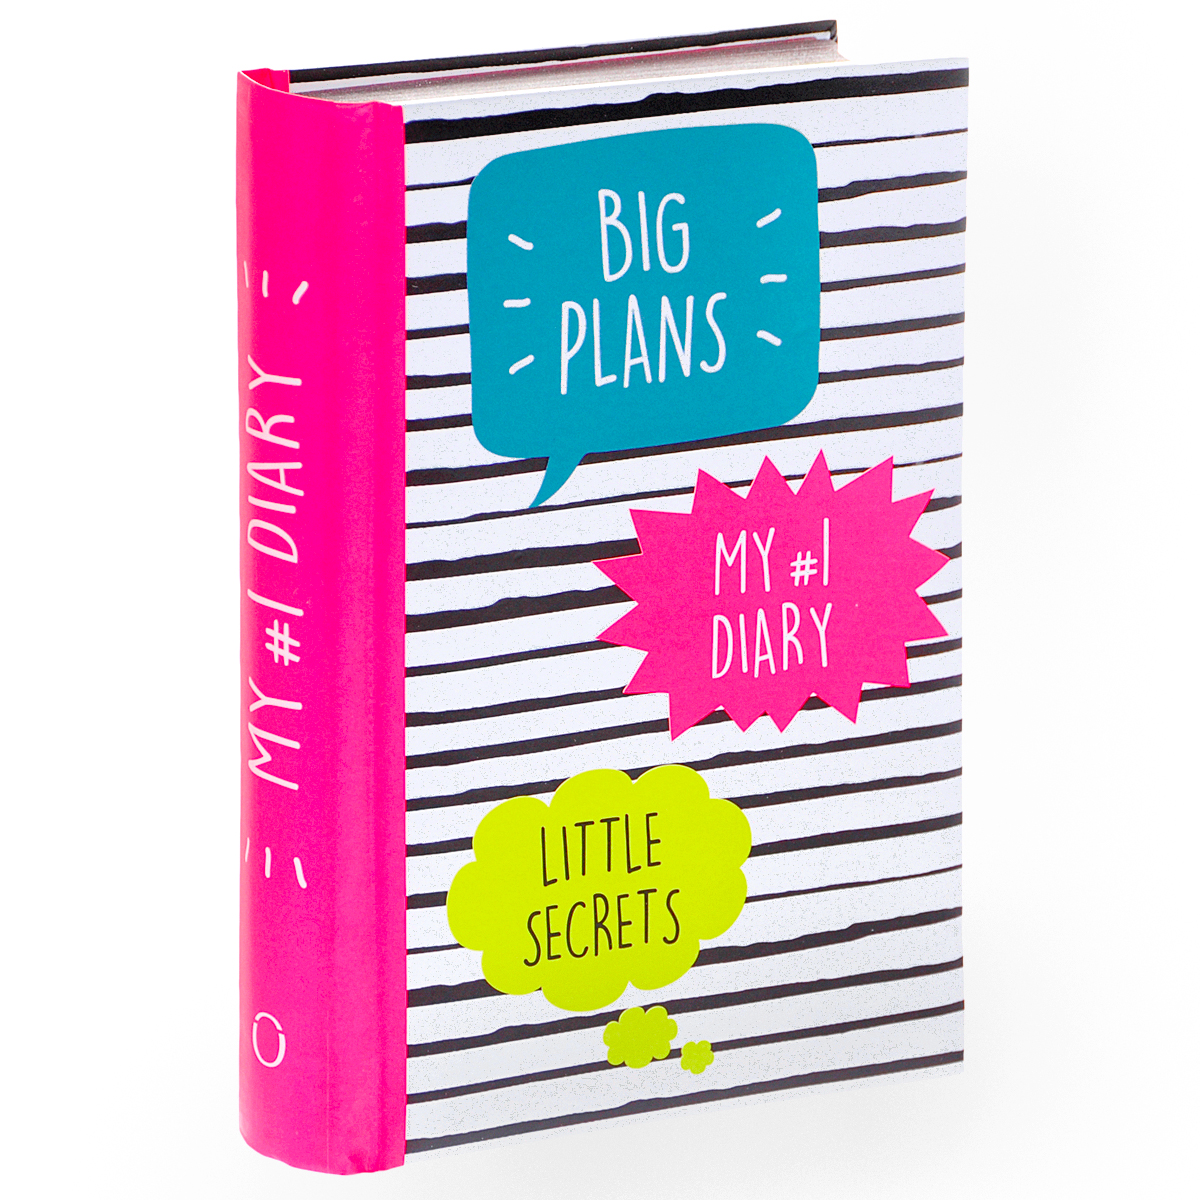 My№ 1 Diary: Big Plans: Little Secrets